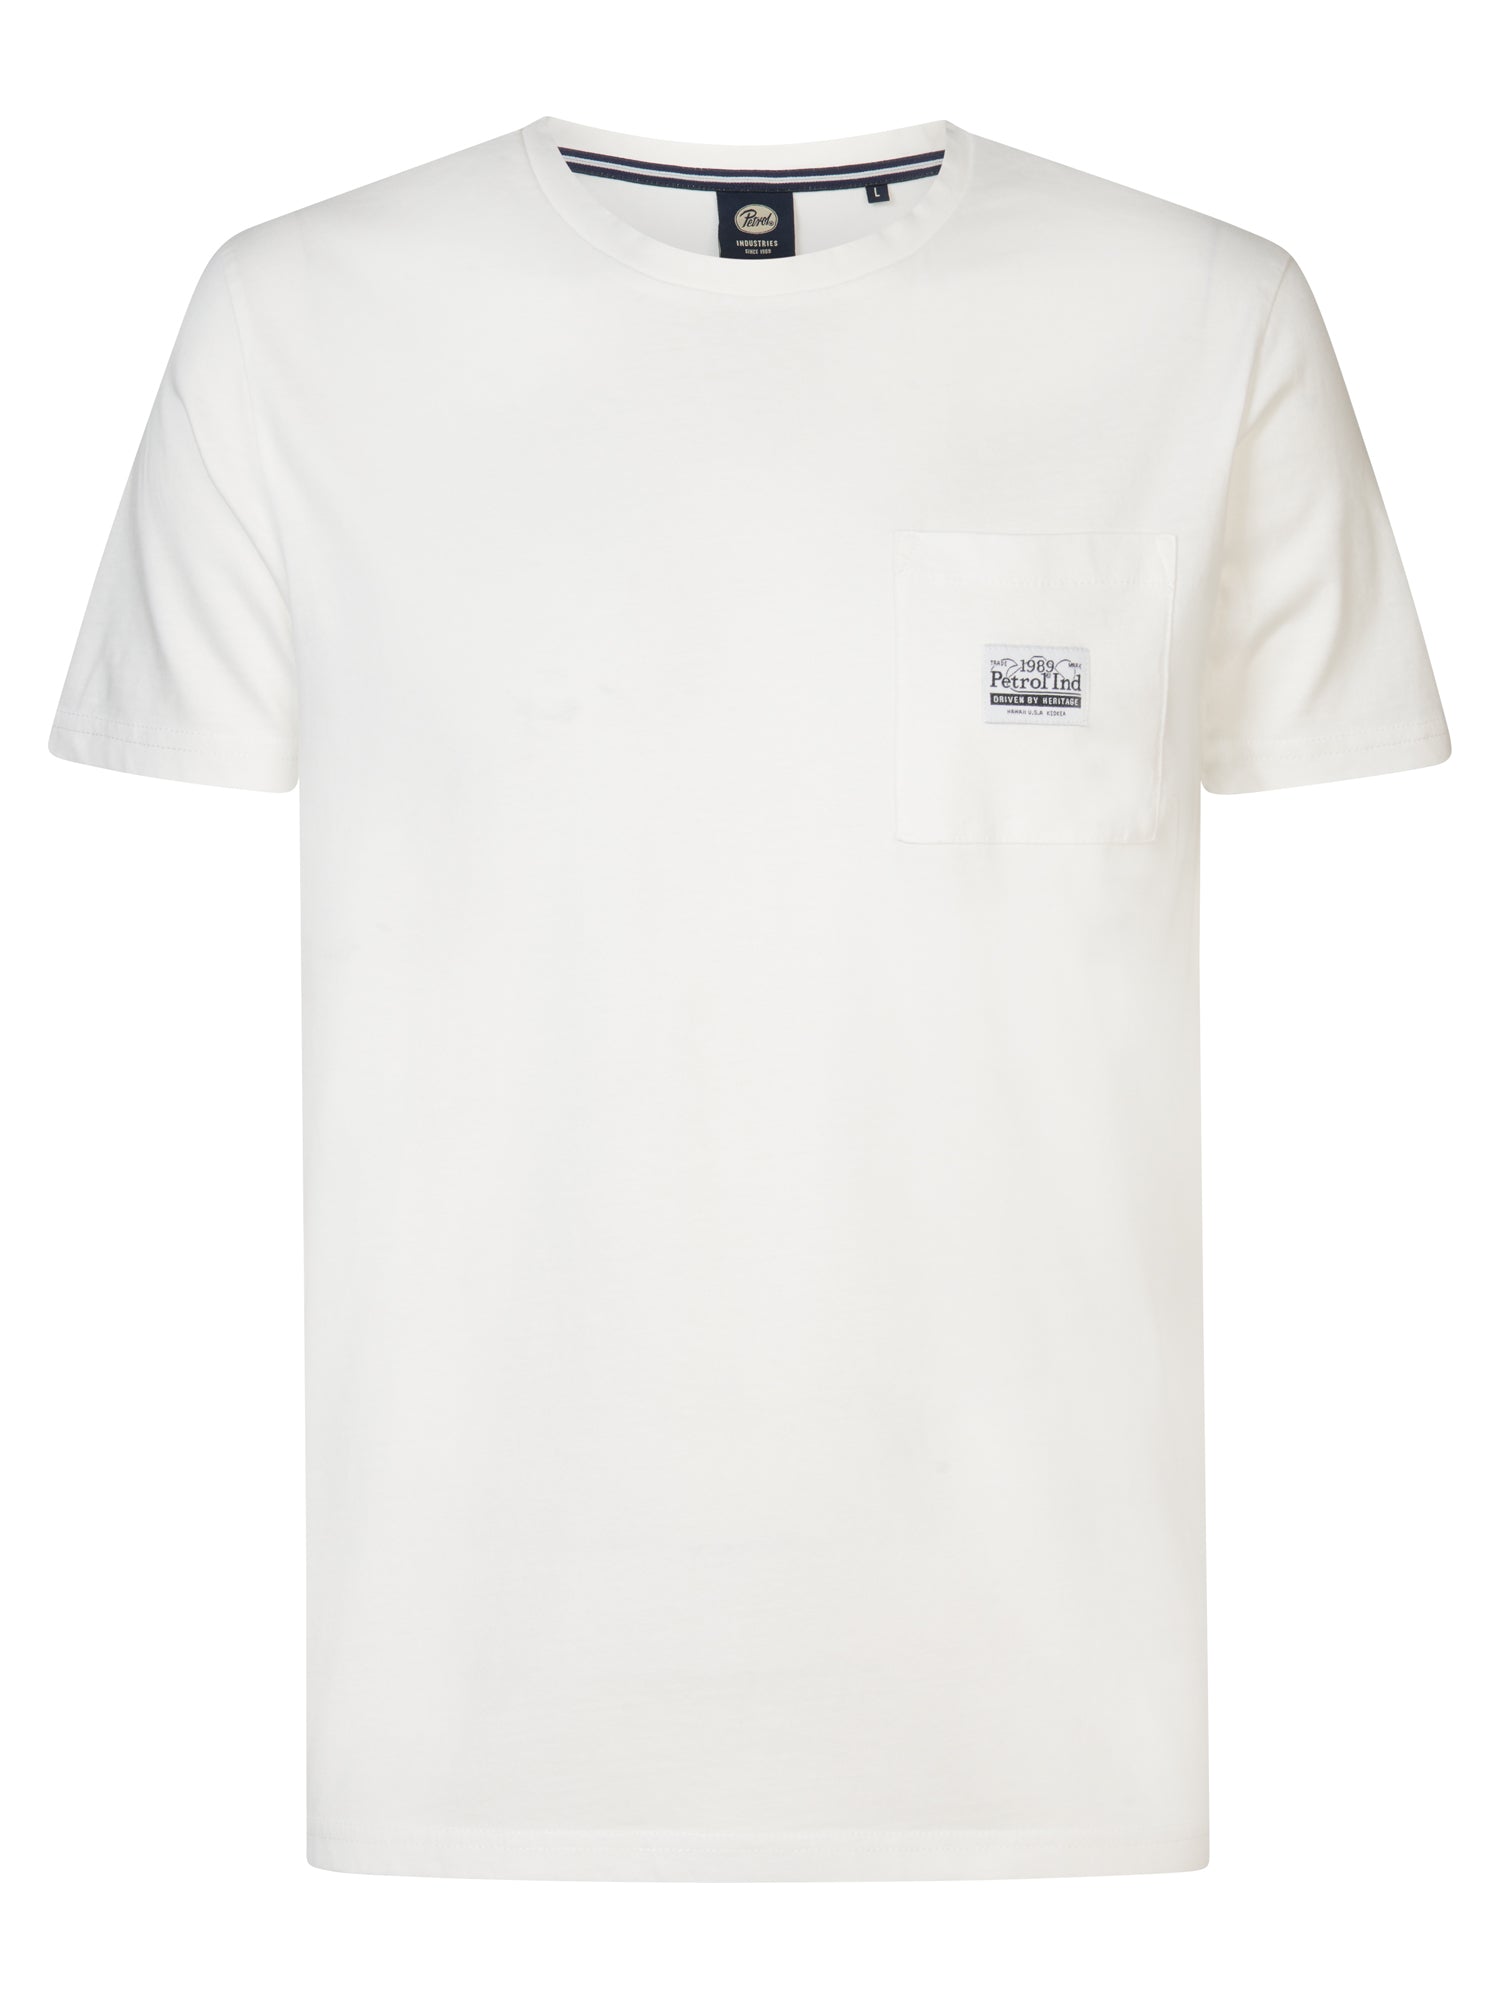 Logo T-shirt Amelia Island | Official Petrol Industries® Online Store